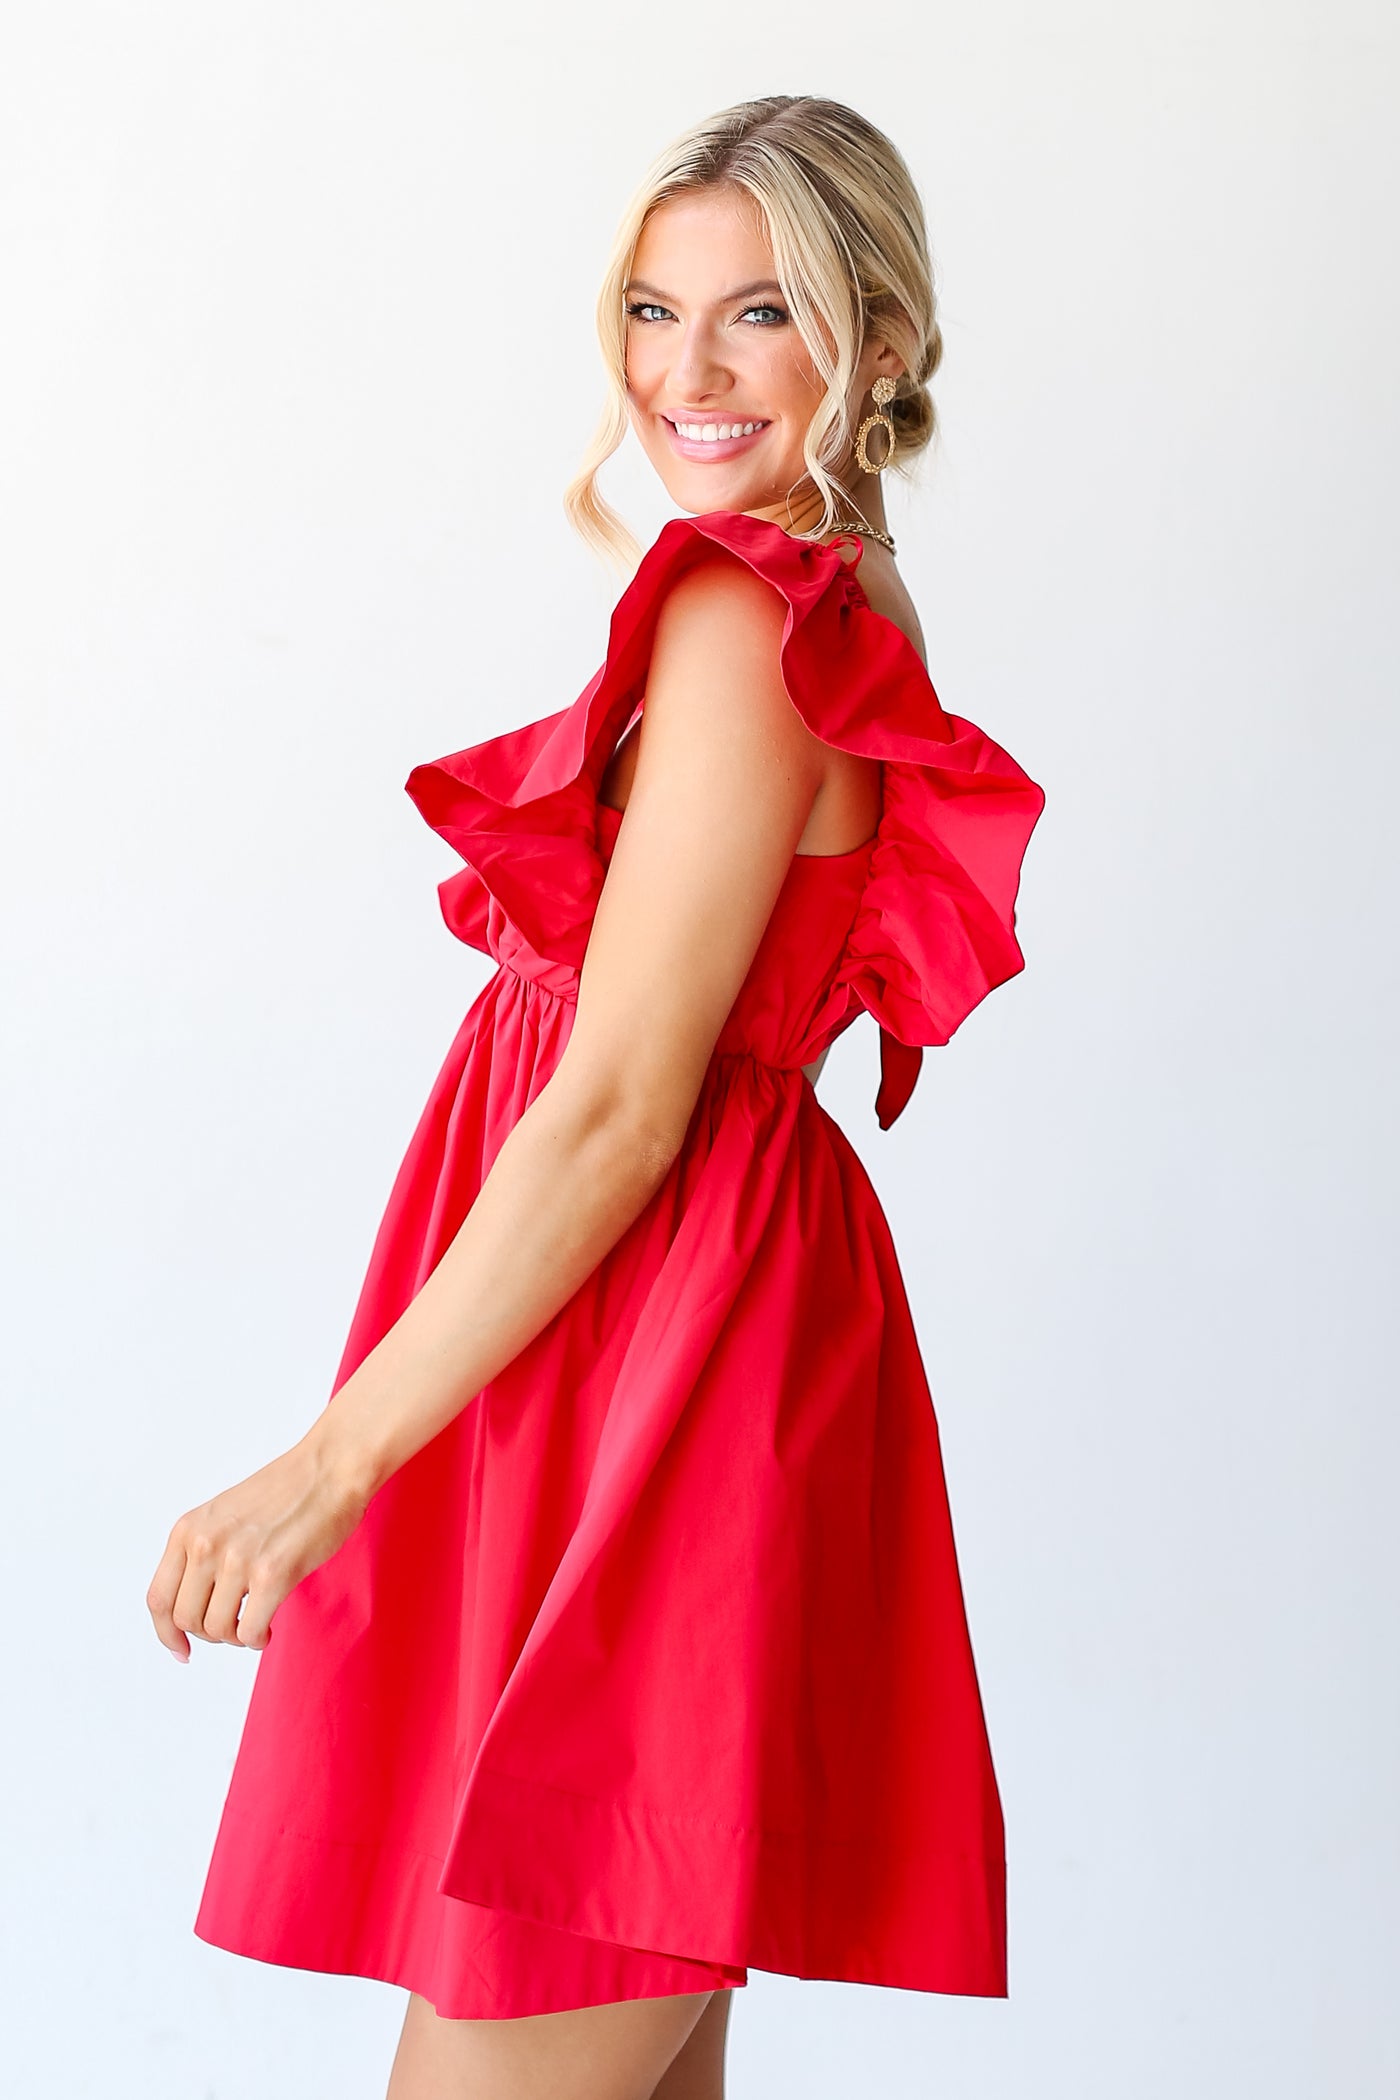 red Mini Dress side view